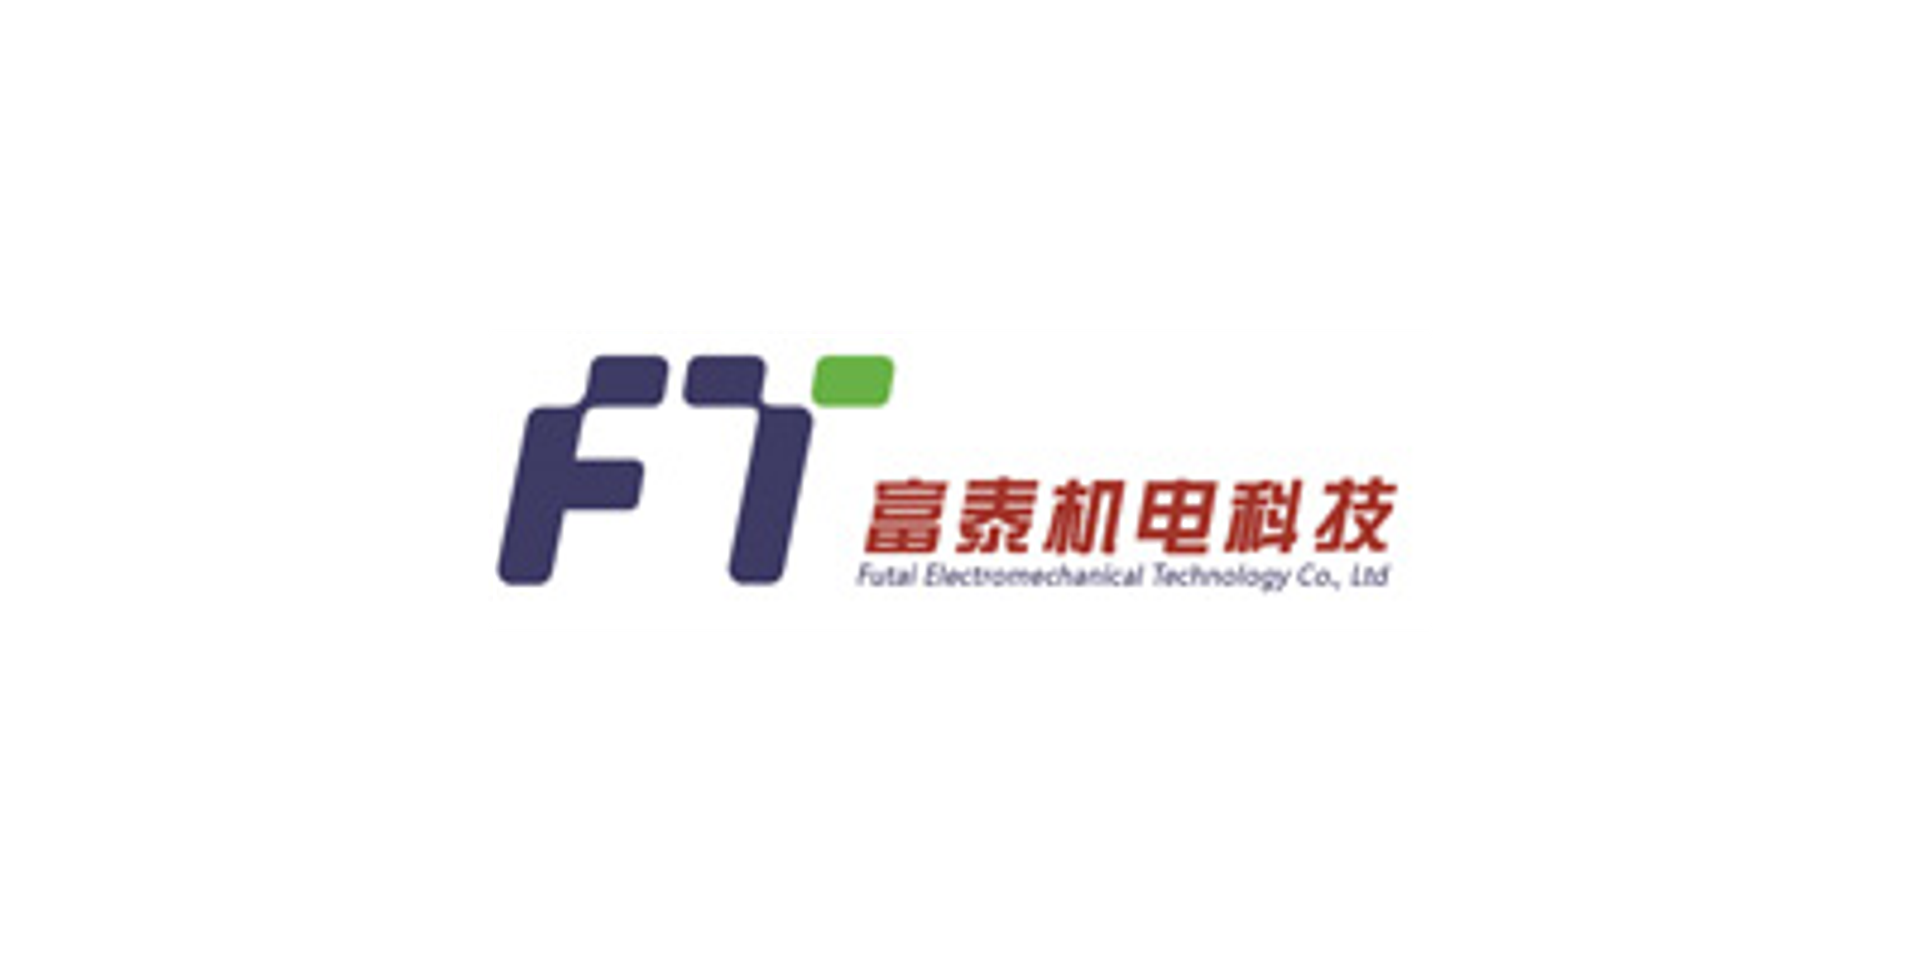 Qingdao Fu Tai Electrical Technology Co., Ltd.